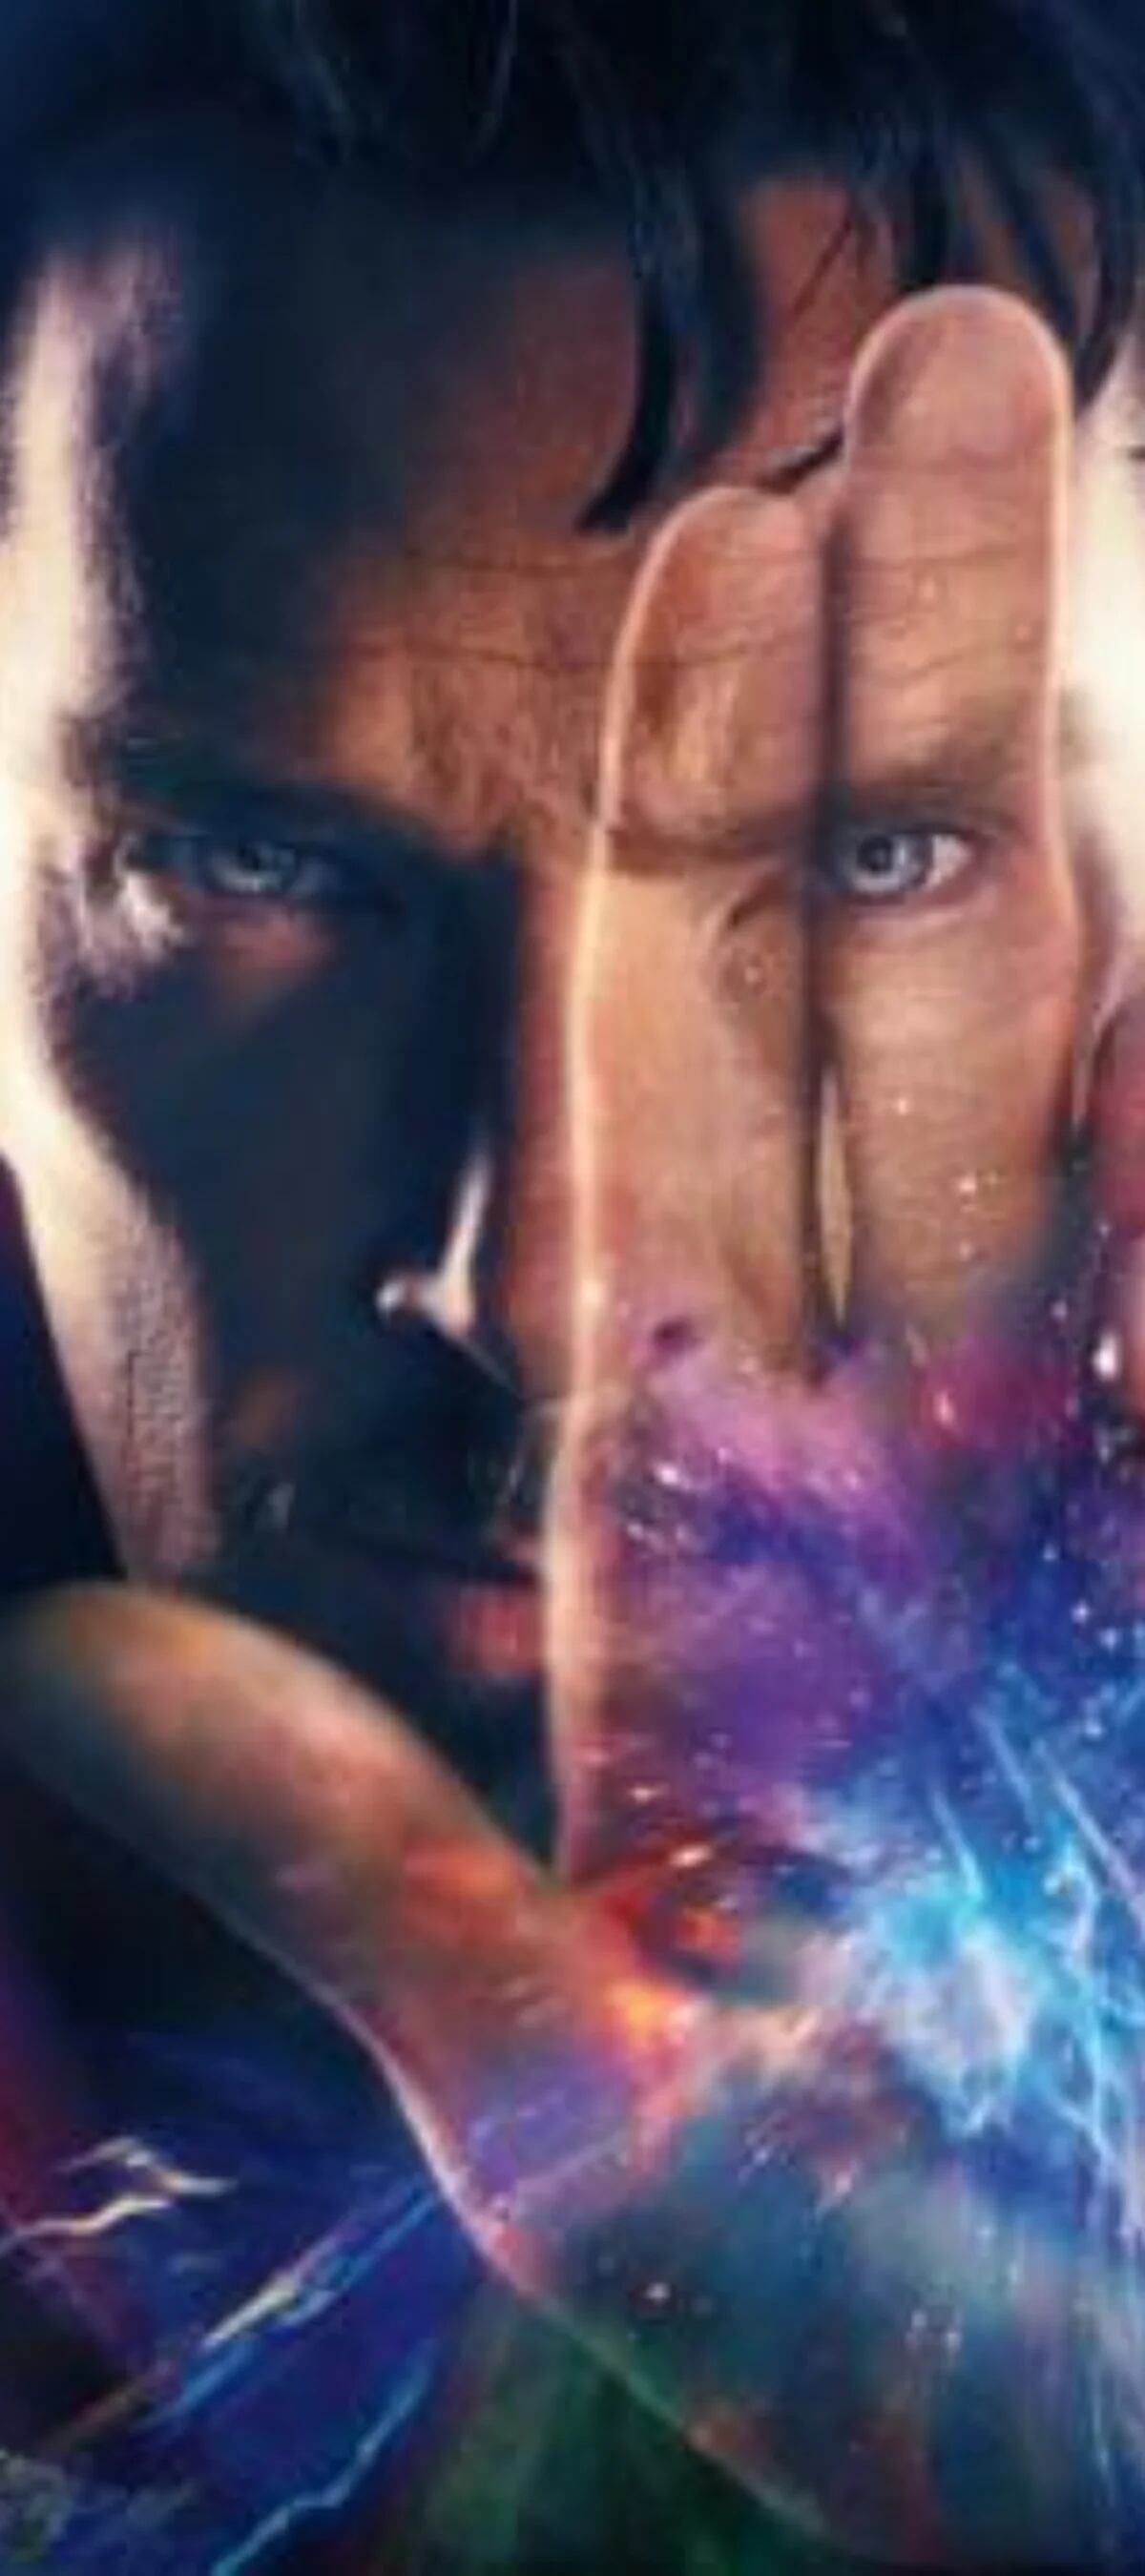 Doctor Strange in the Multiverse of Madness recebe novo trailer